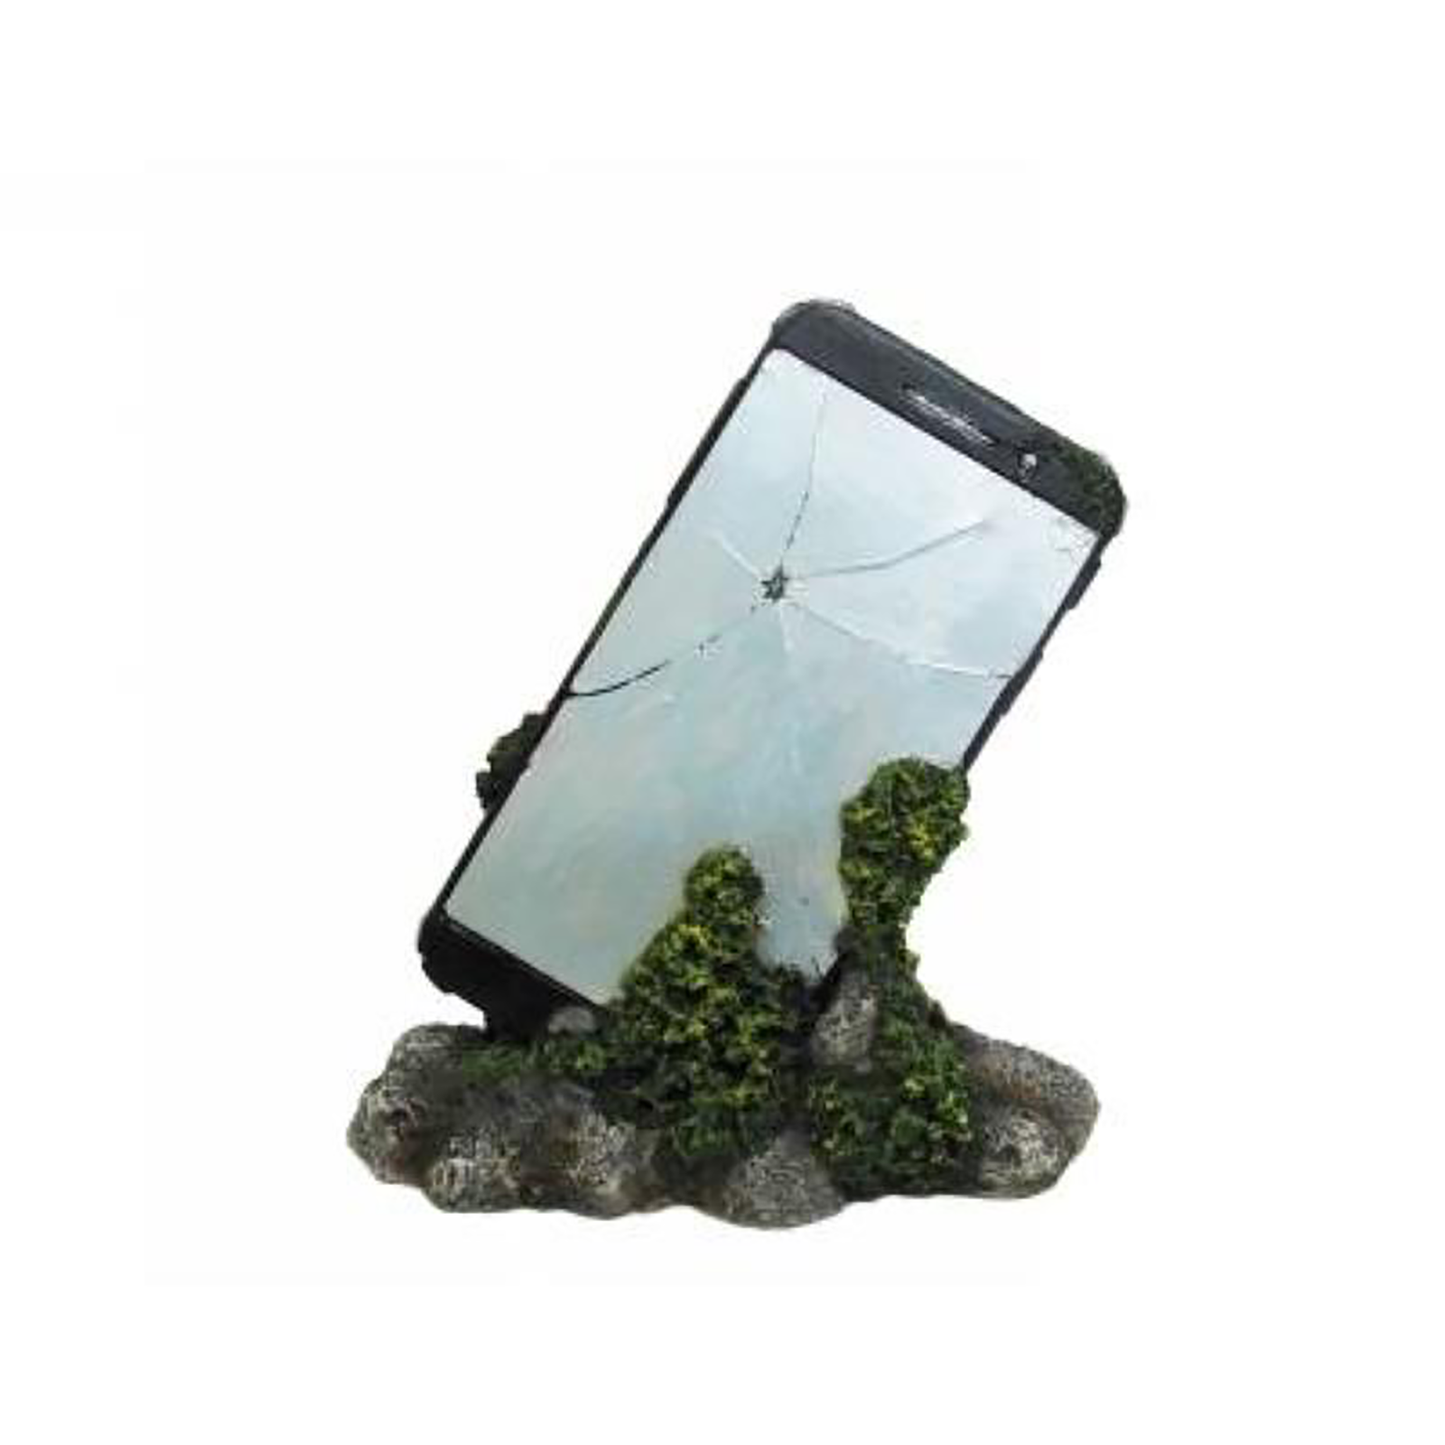 Classic Broken Mobile Phone Aquarium Ornament 155 x 80 x 162mm